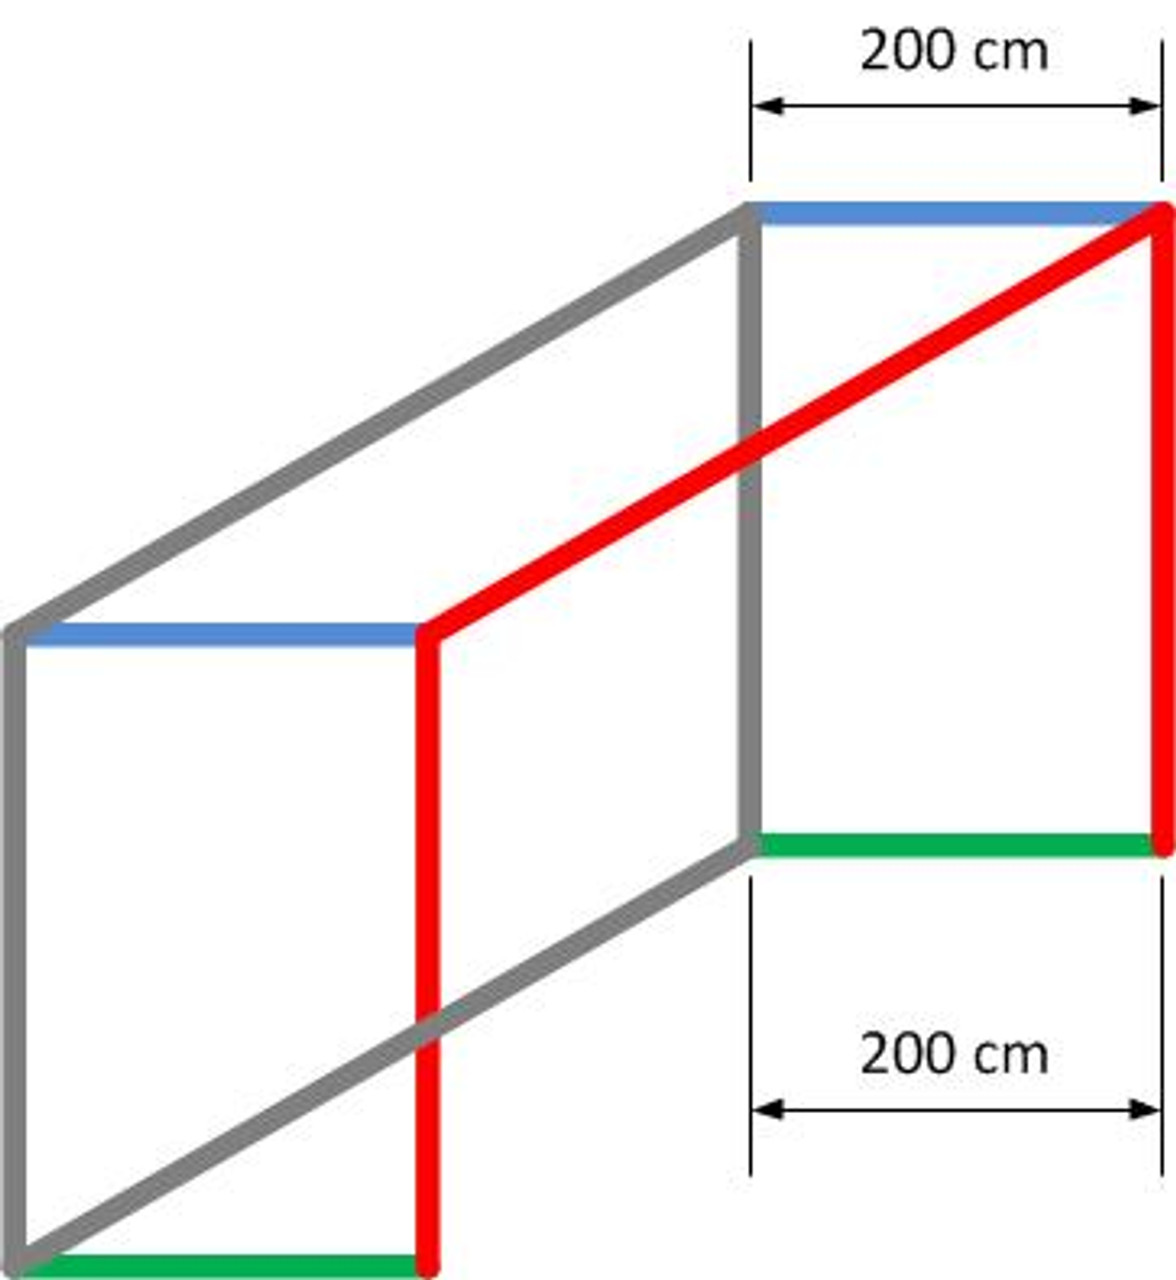 Full Size Continental Football Goal Net - 2.3mm Diameter - Single Net